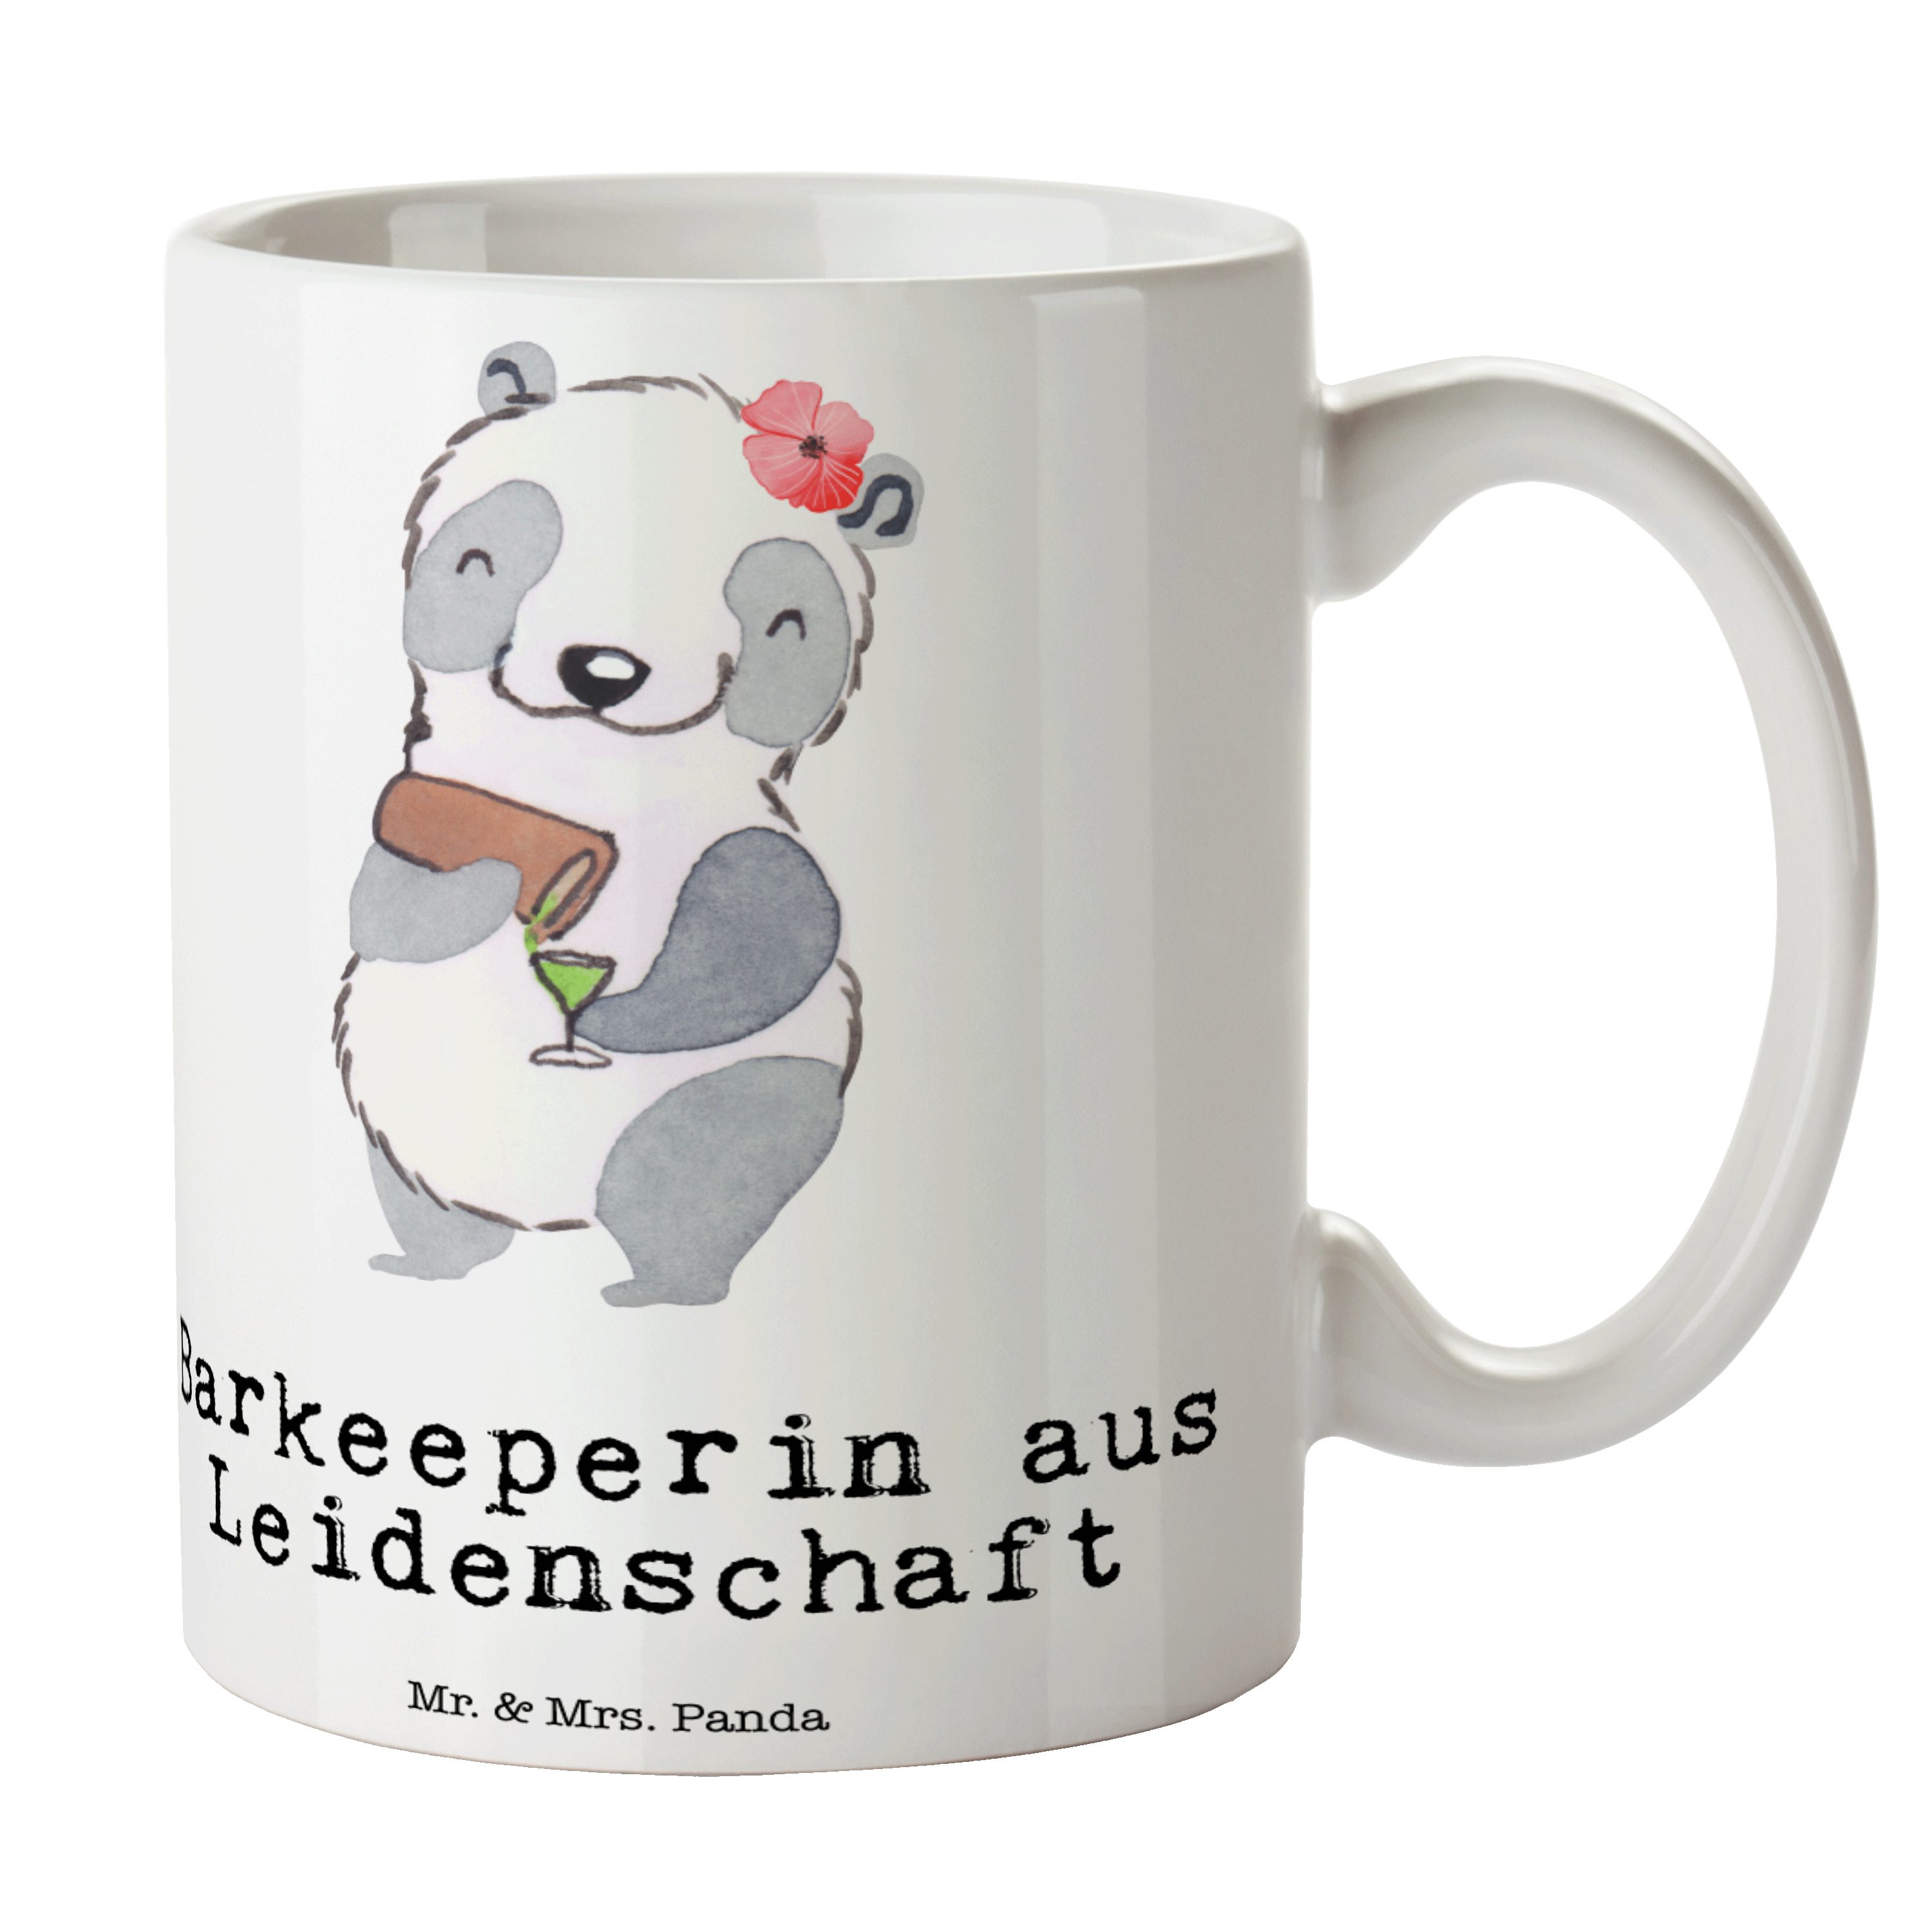 Mr. & Mrs. Panda - Barkeeperin Barbesitzerin, Weiß Tasse Keramik Geschenk, Kaffee, aus Leidenschaft 